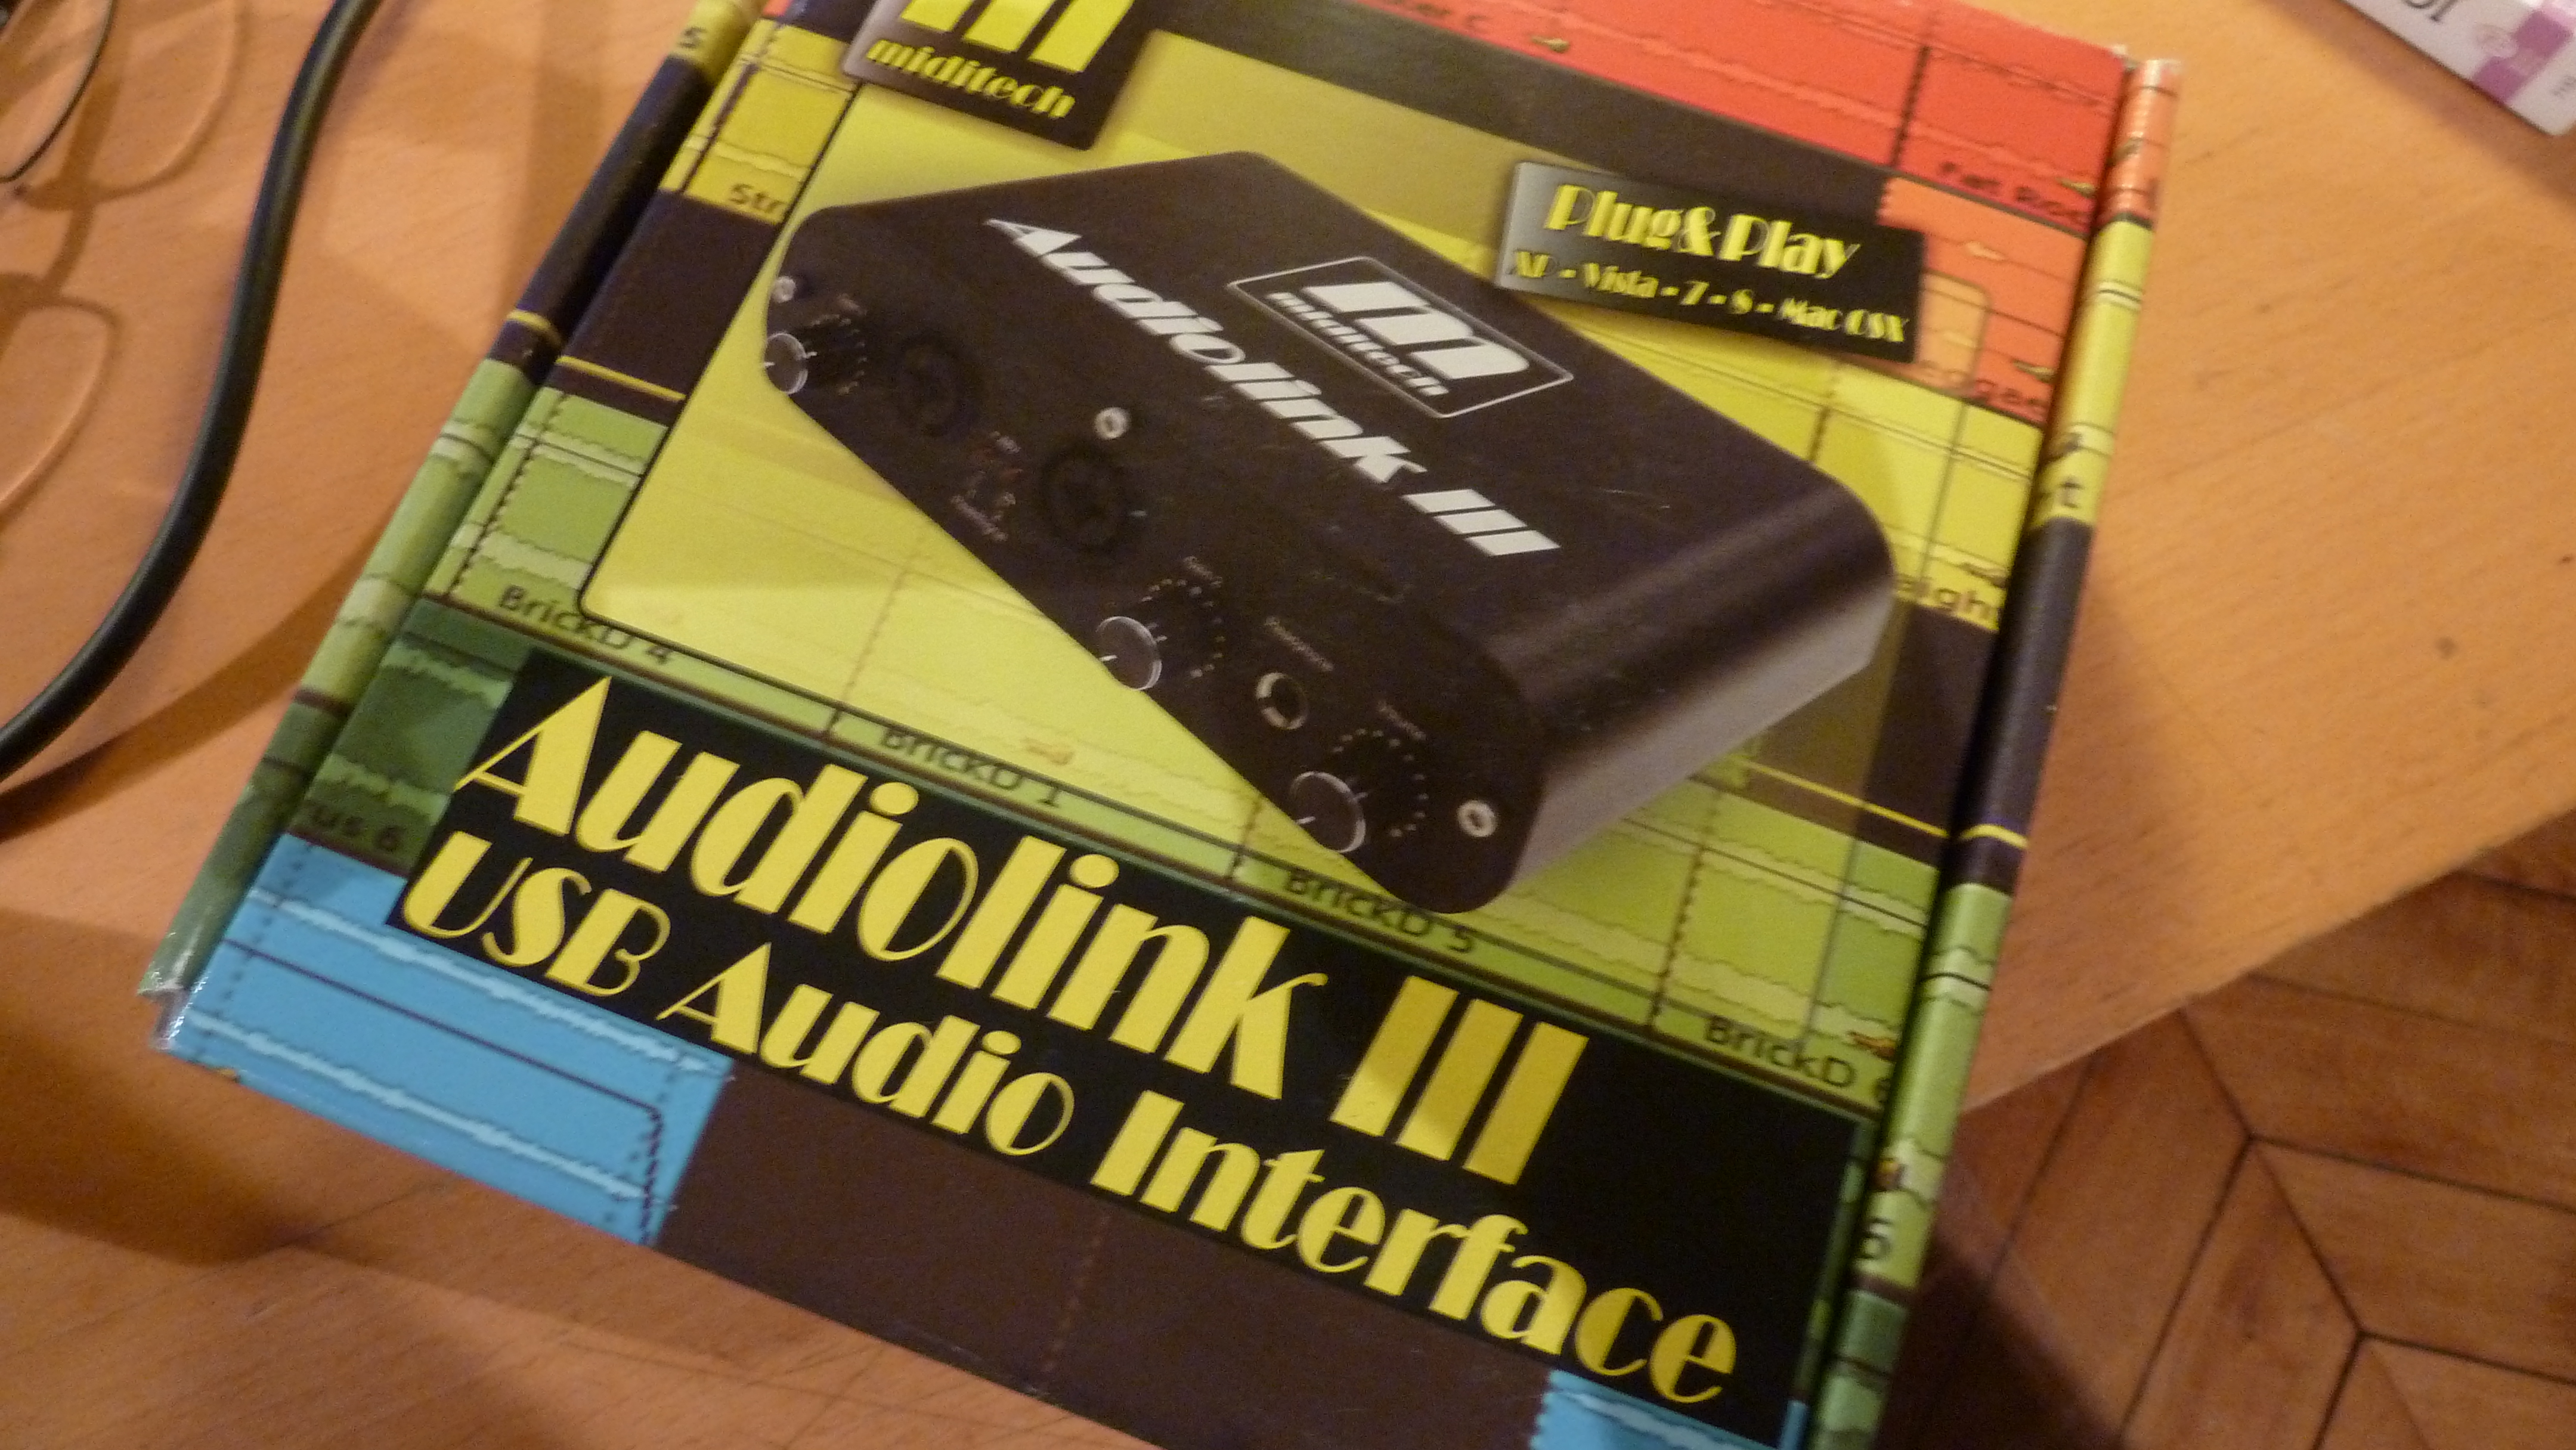 Audiolink IV - Miditech Audiolink IV - Audiofanzine